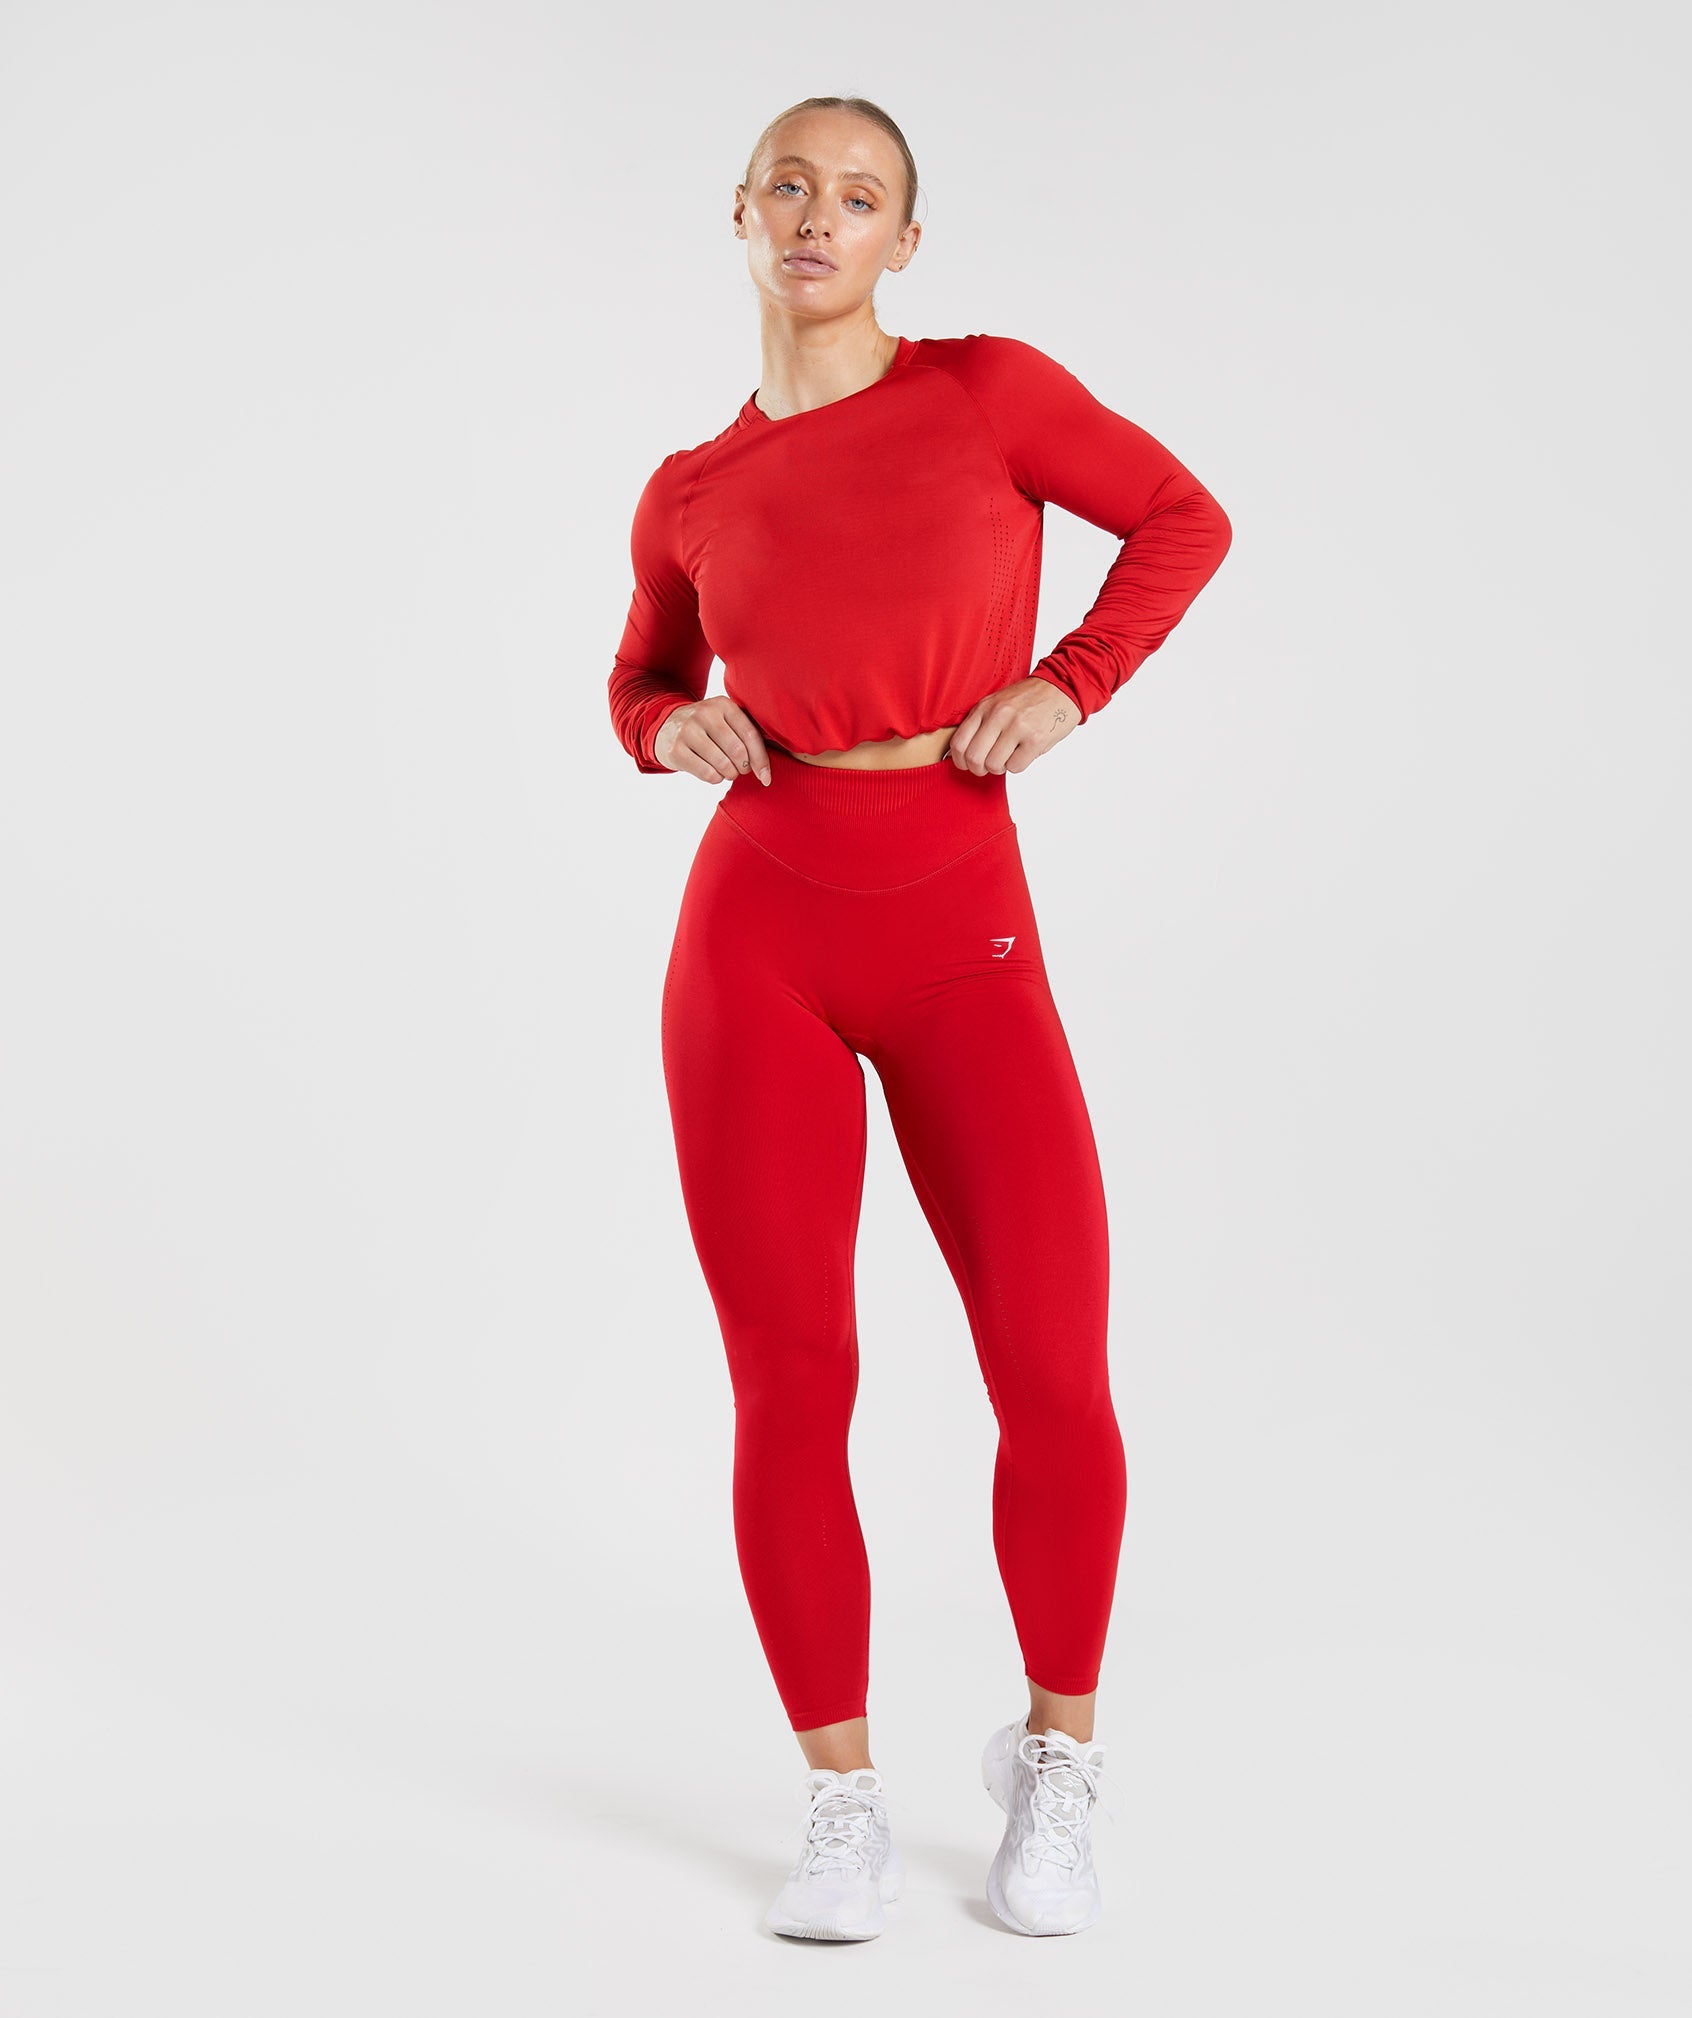 Gymshark Camo Seamless Long Sleeve Crop Top Red - $45 (30% Off